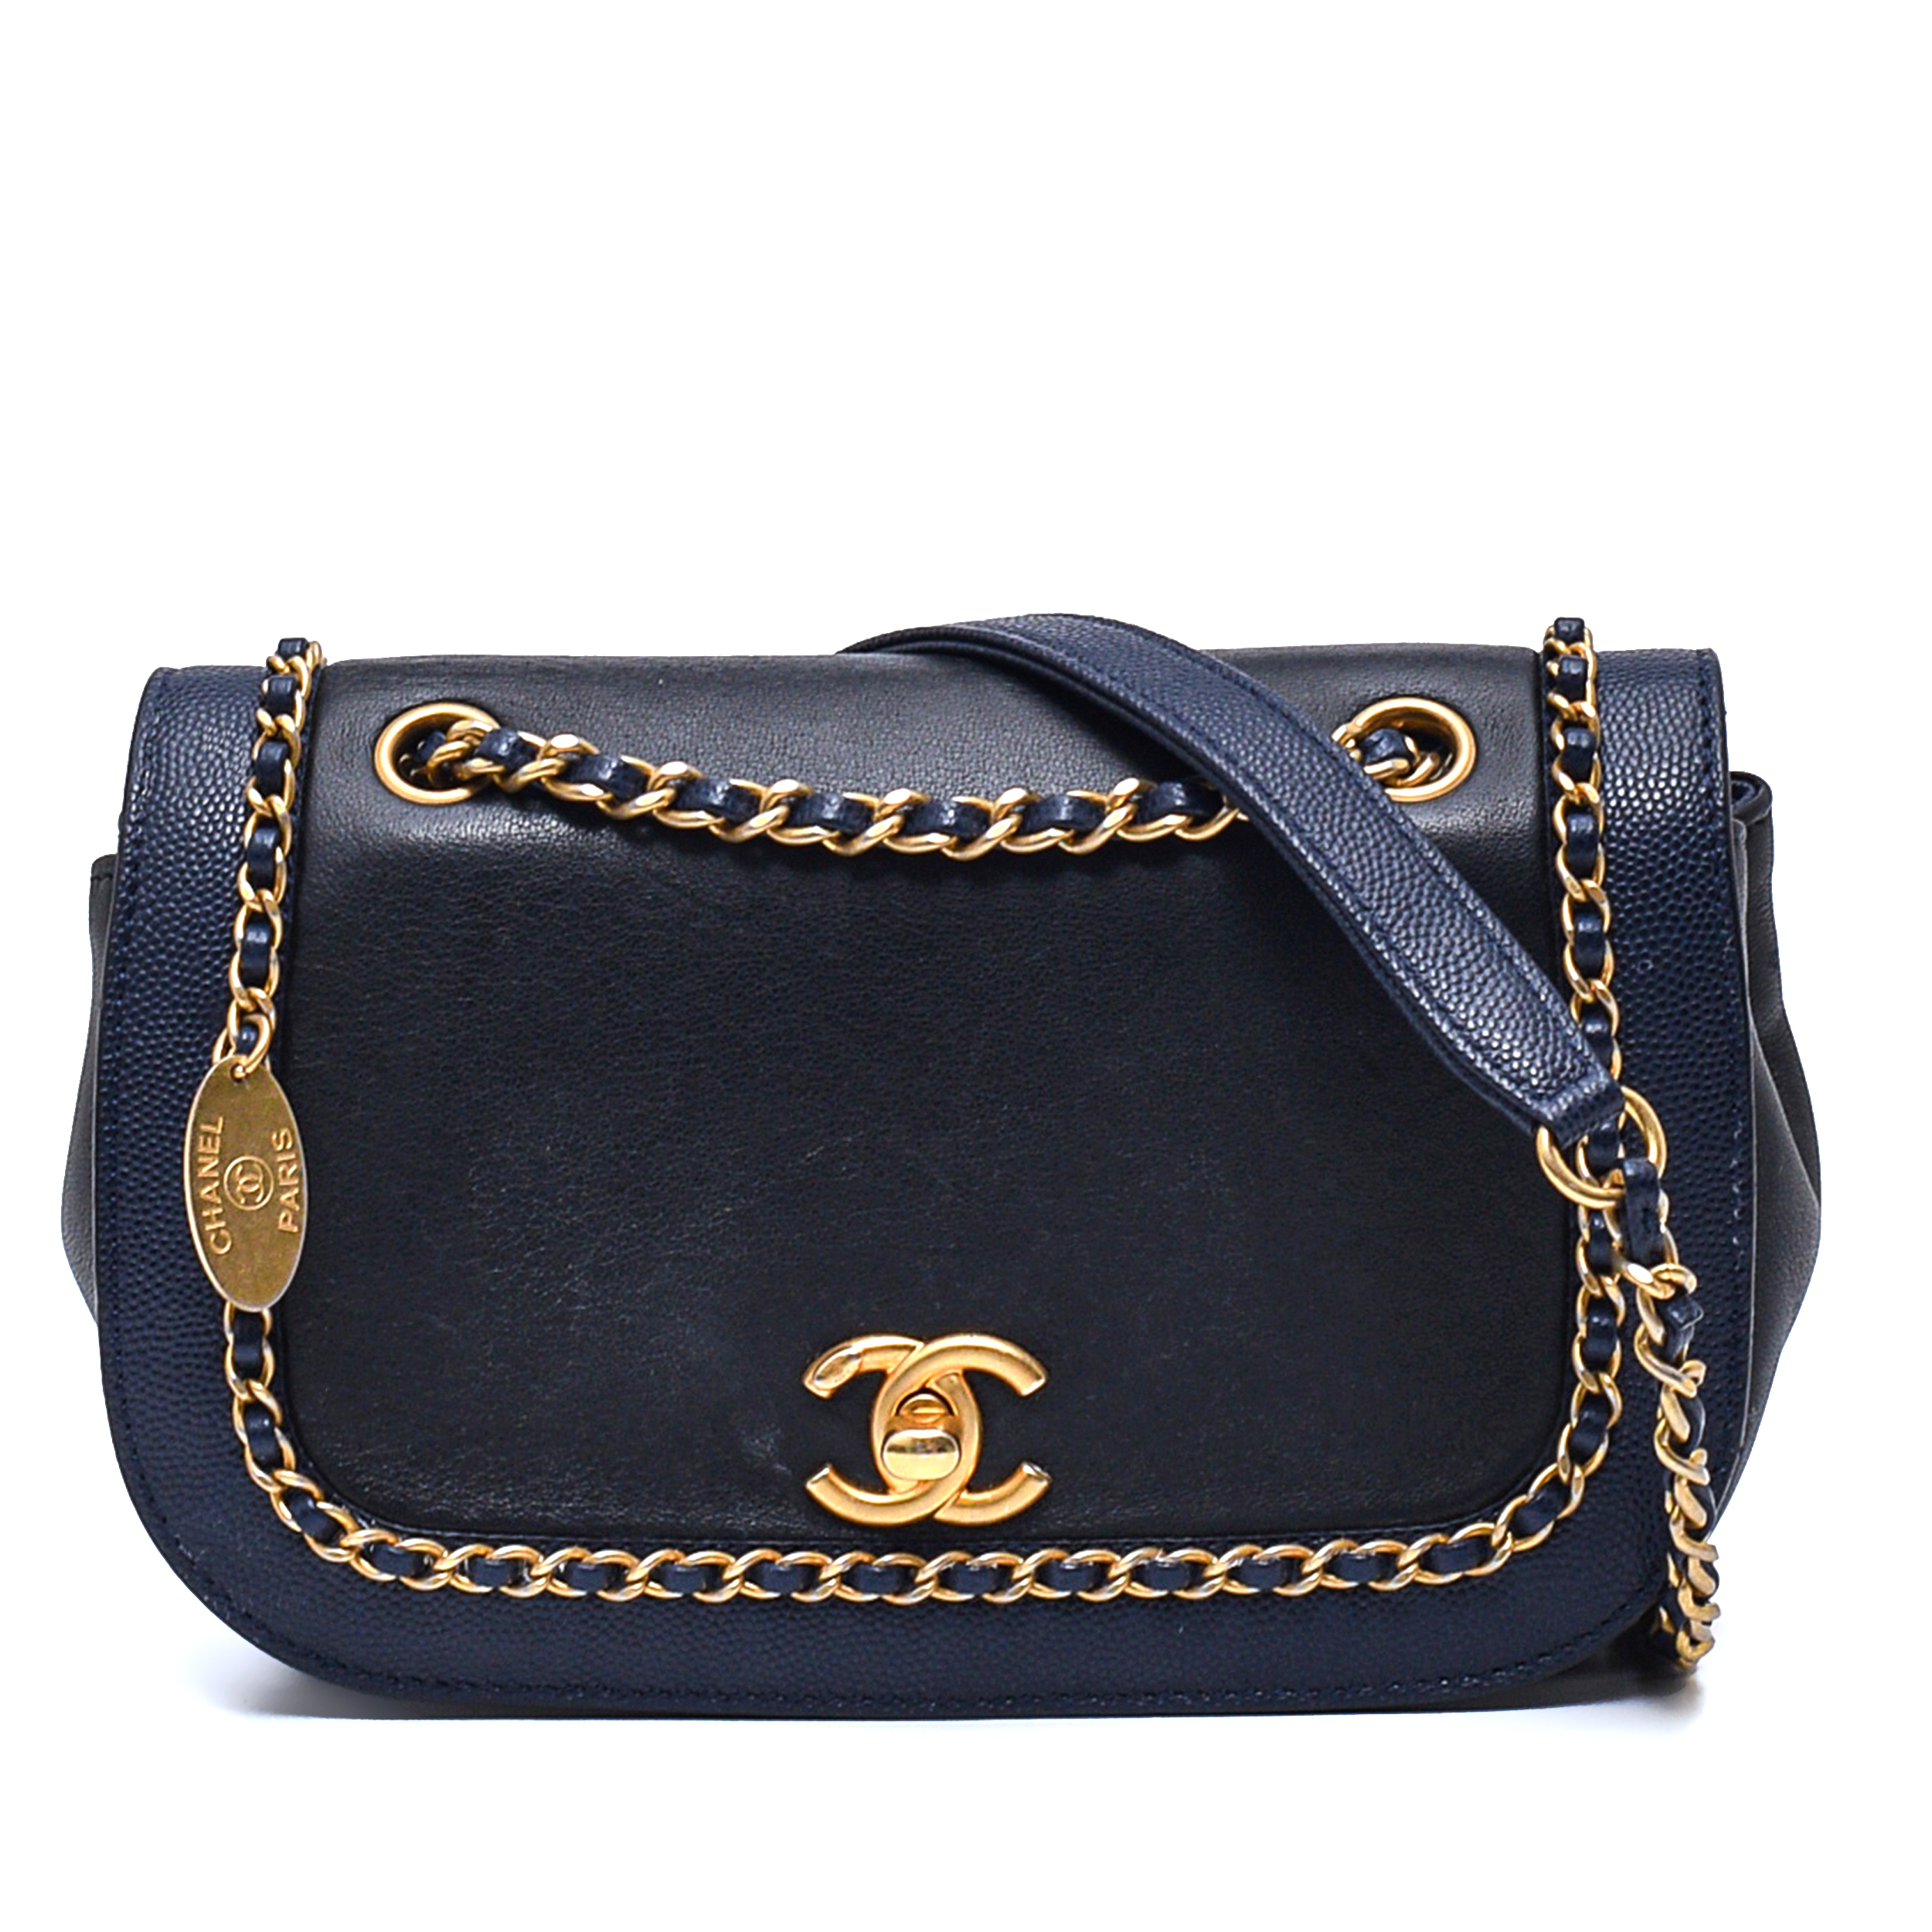 Chanel - Black&Navy Calfskin Leather Chain Around Flap Bag